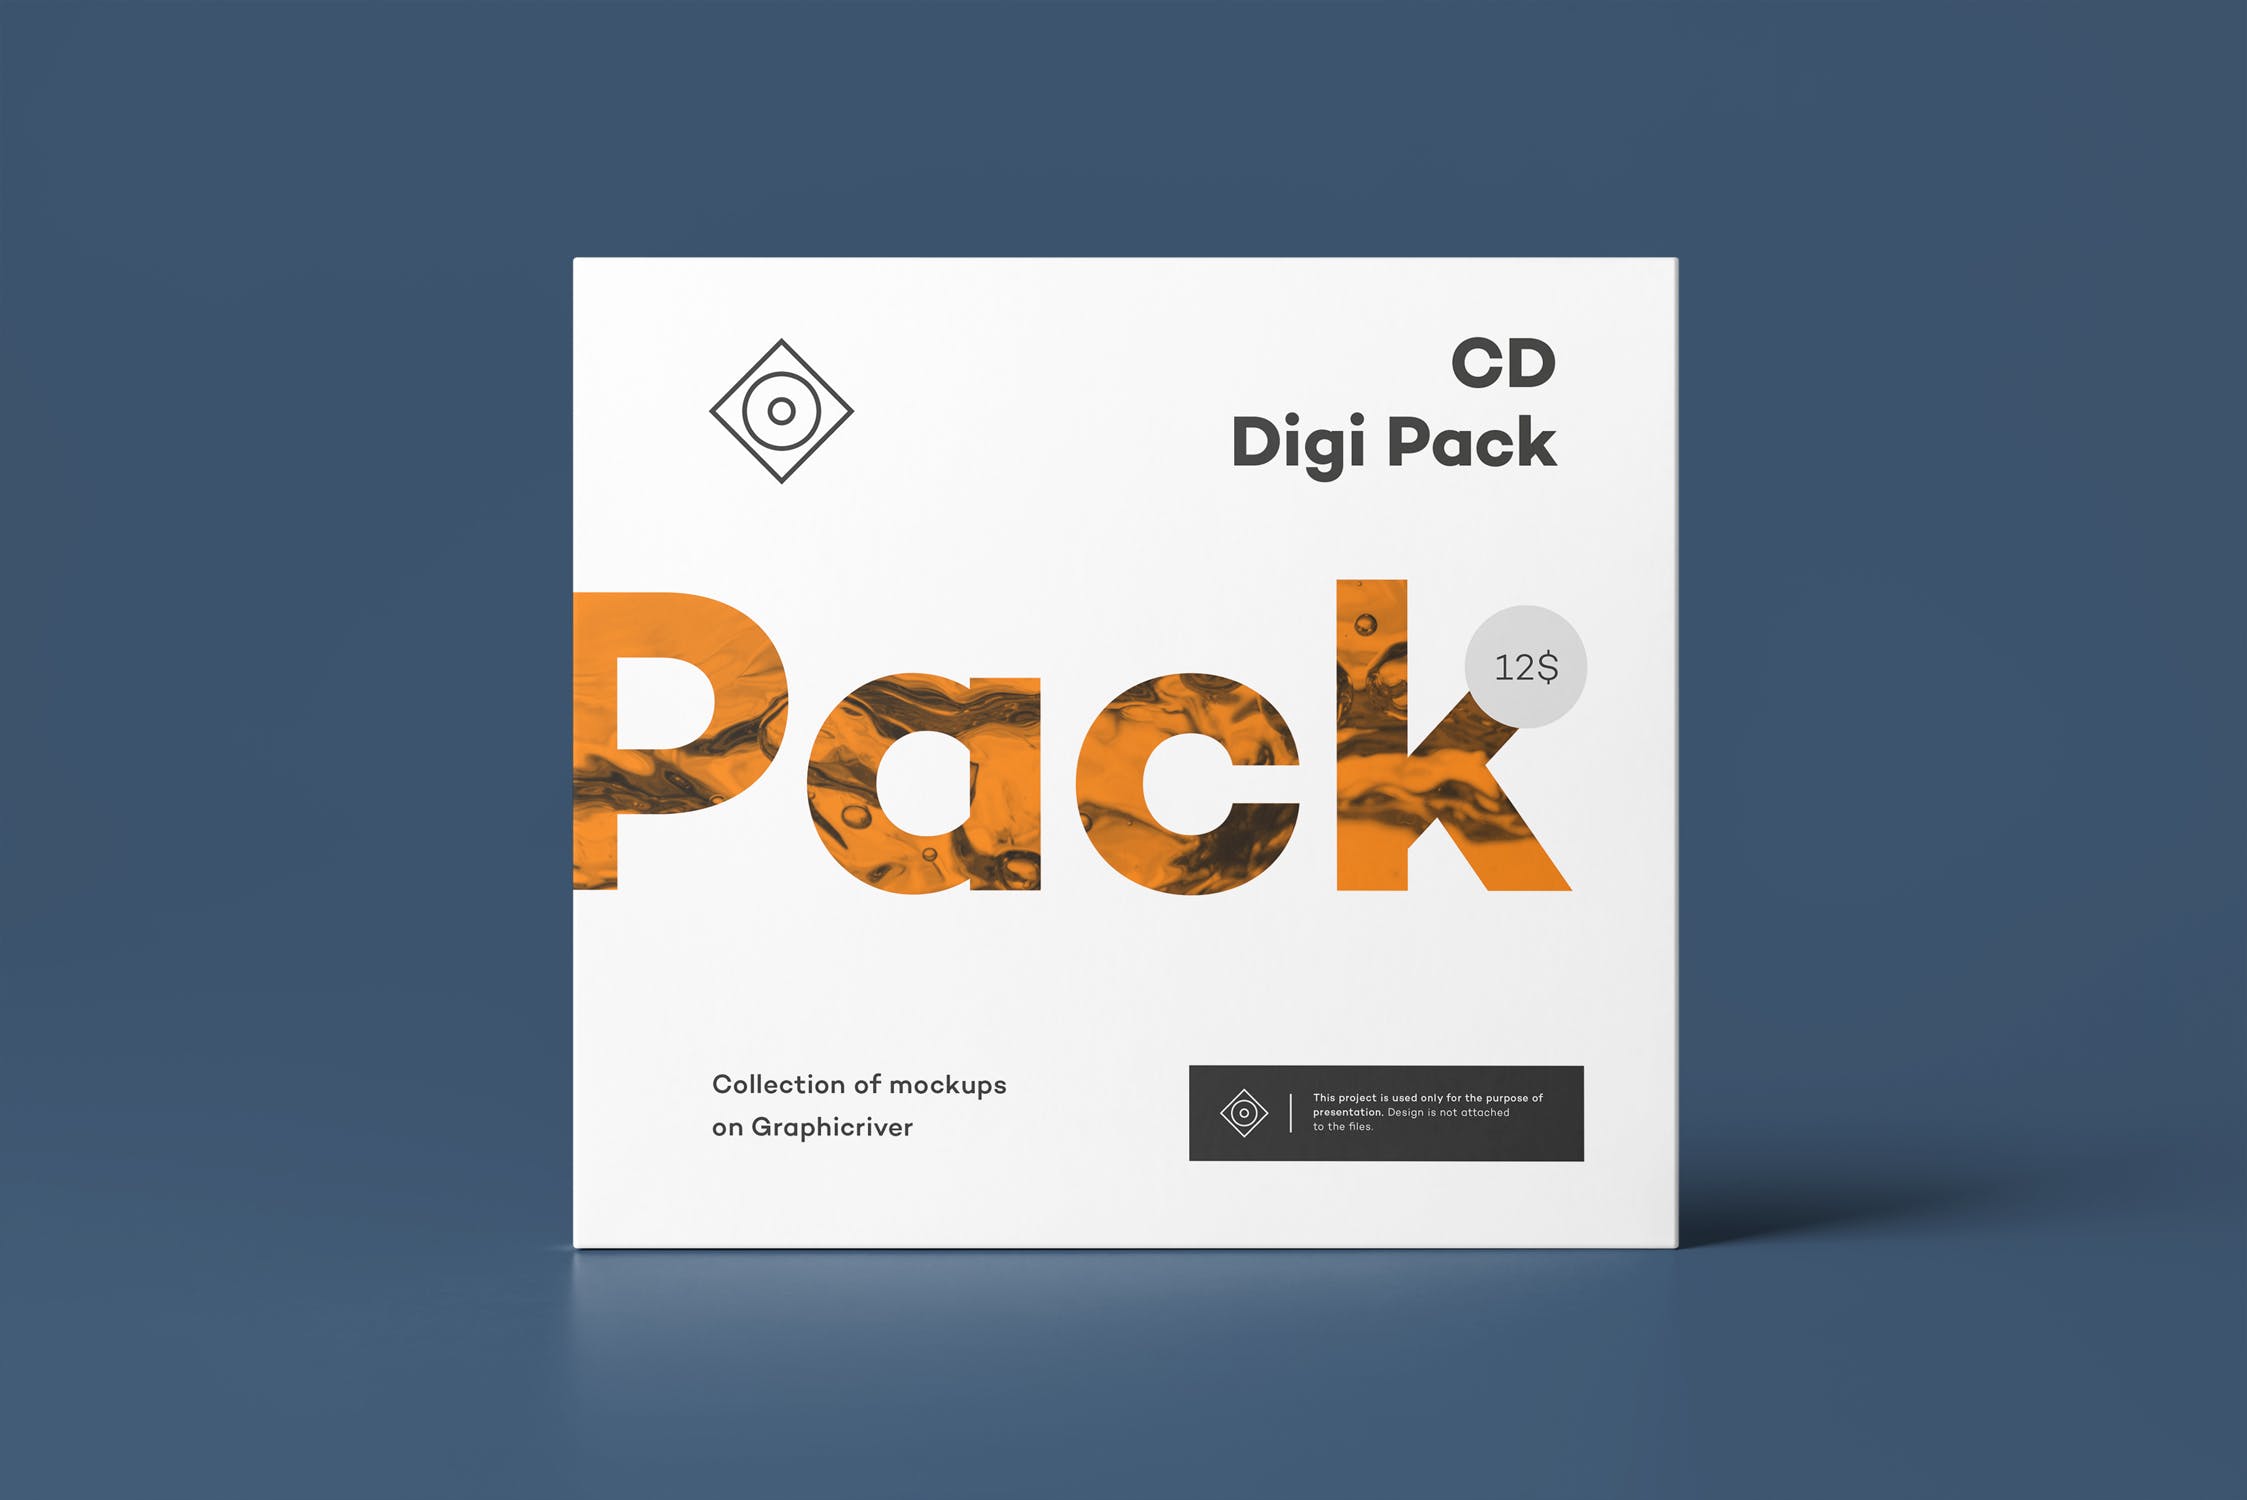 CD光碟封面&包装盒设计图蚂蚁素材精选模板v8 CD Digi Pack Mock-up 8插图(12)